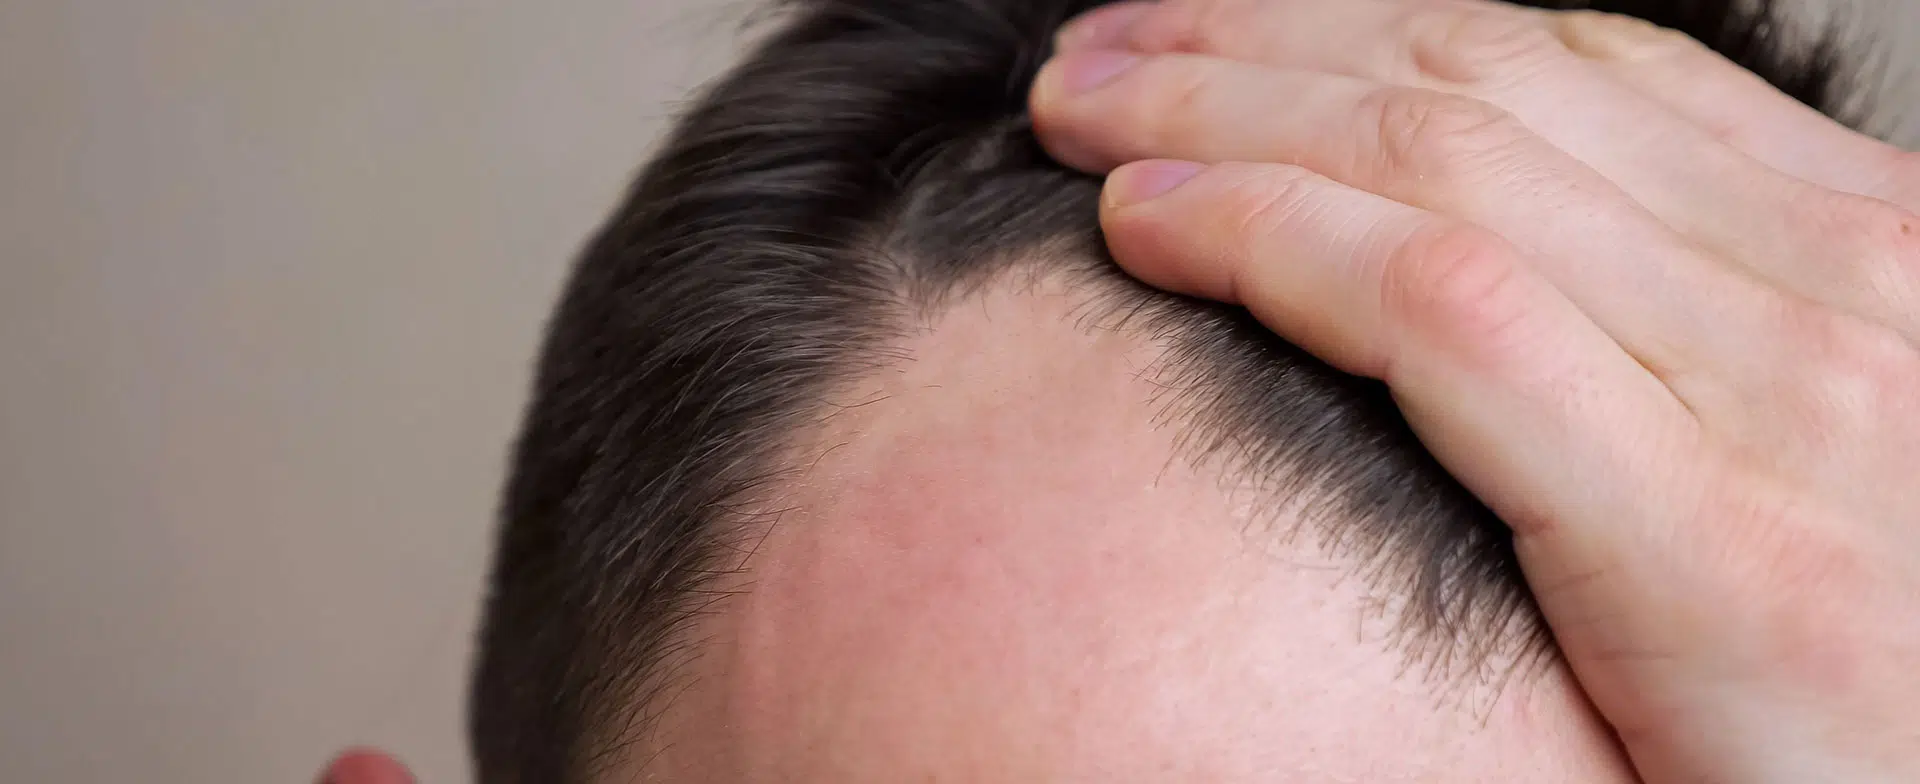 Hair Transplantation and Scarring: Minimizing Risks and Ensuring Safe Healing